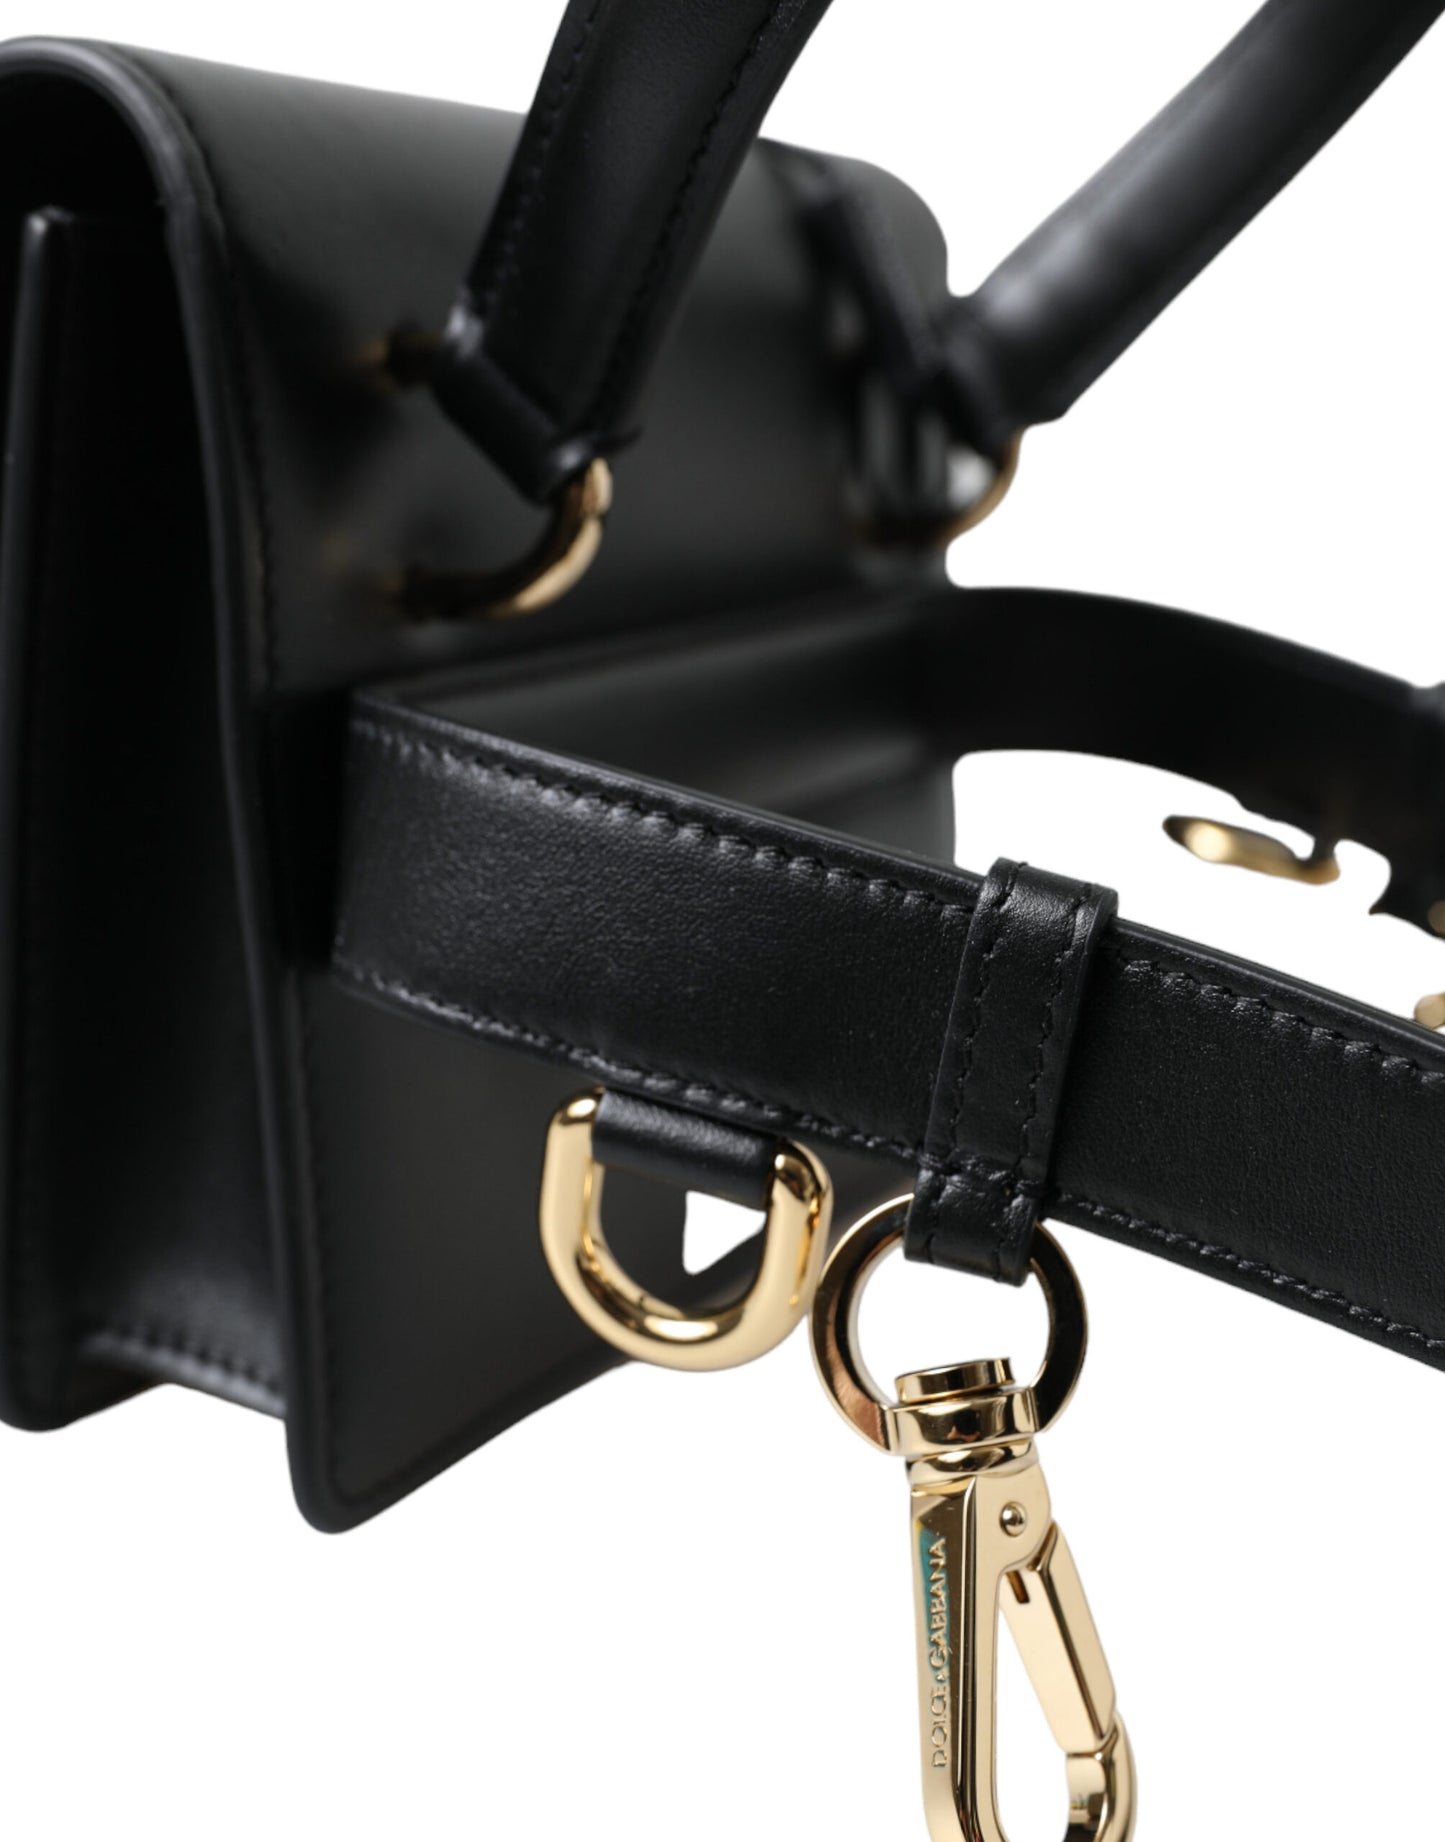 Dolce & Gabbana Elegant Black Leather Belt Bag with Gold Accents